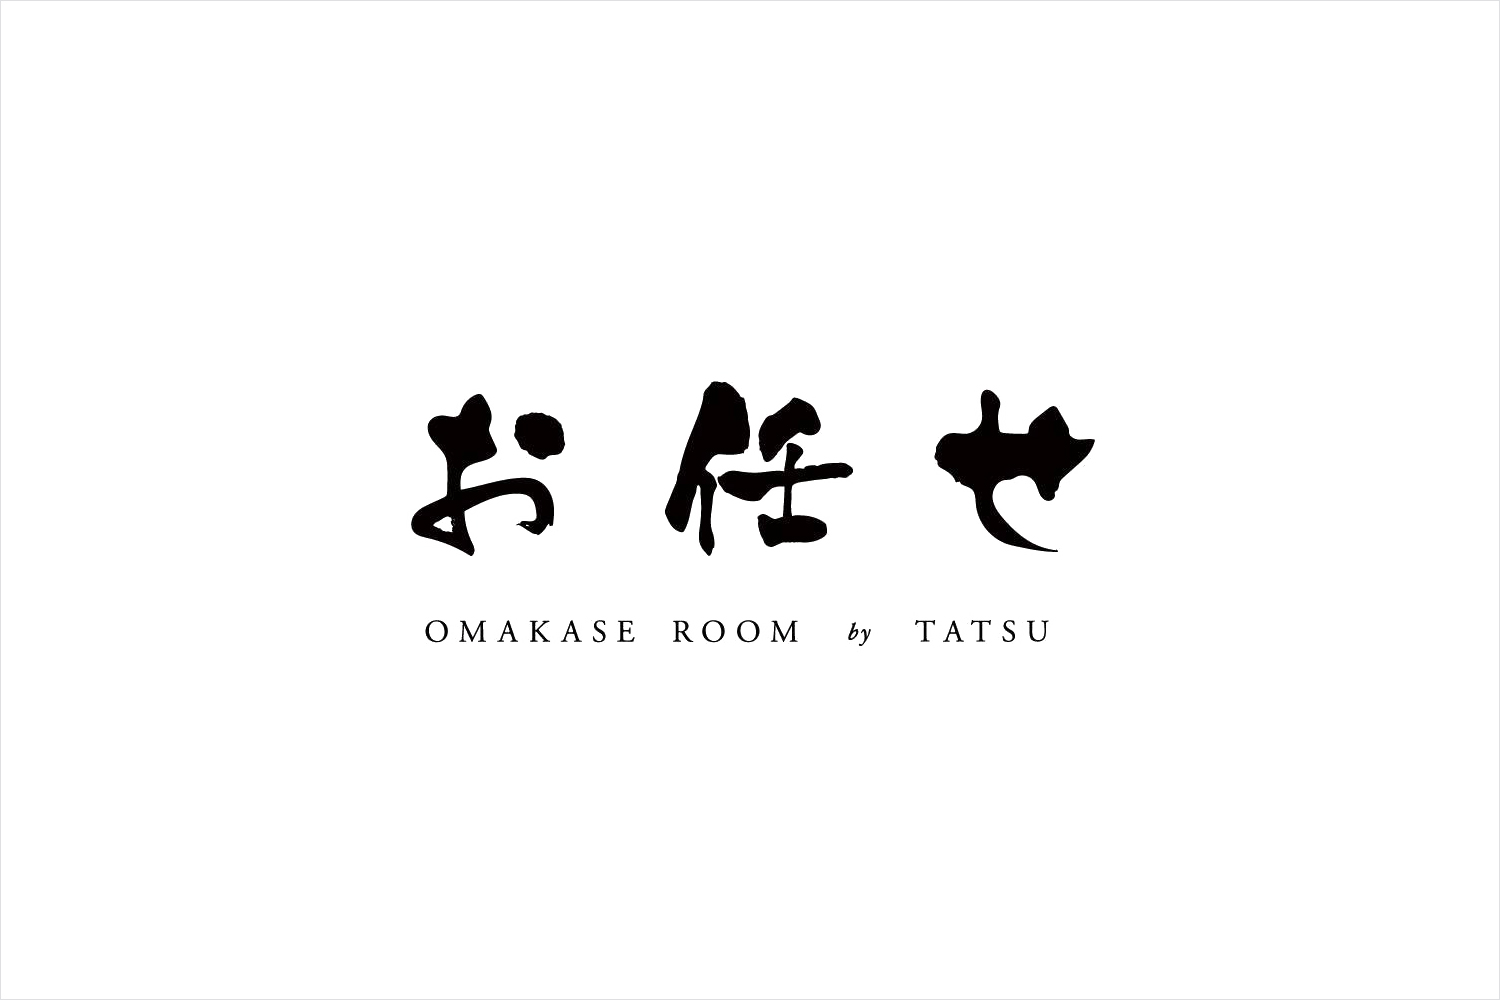 Logotype designed by Savvy for New York restaurant Omakase Room by Tatsu